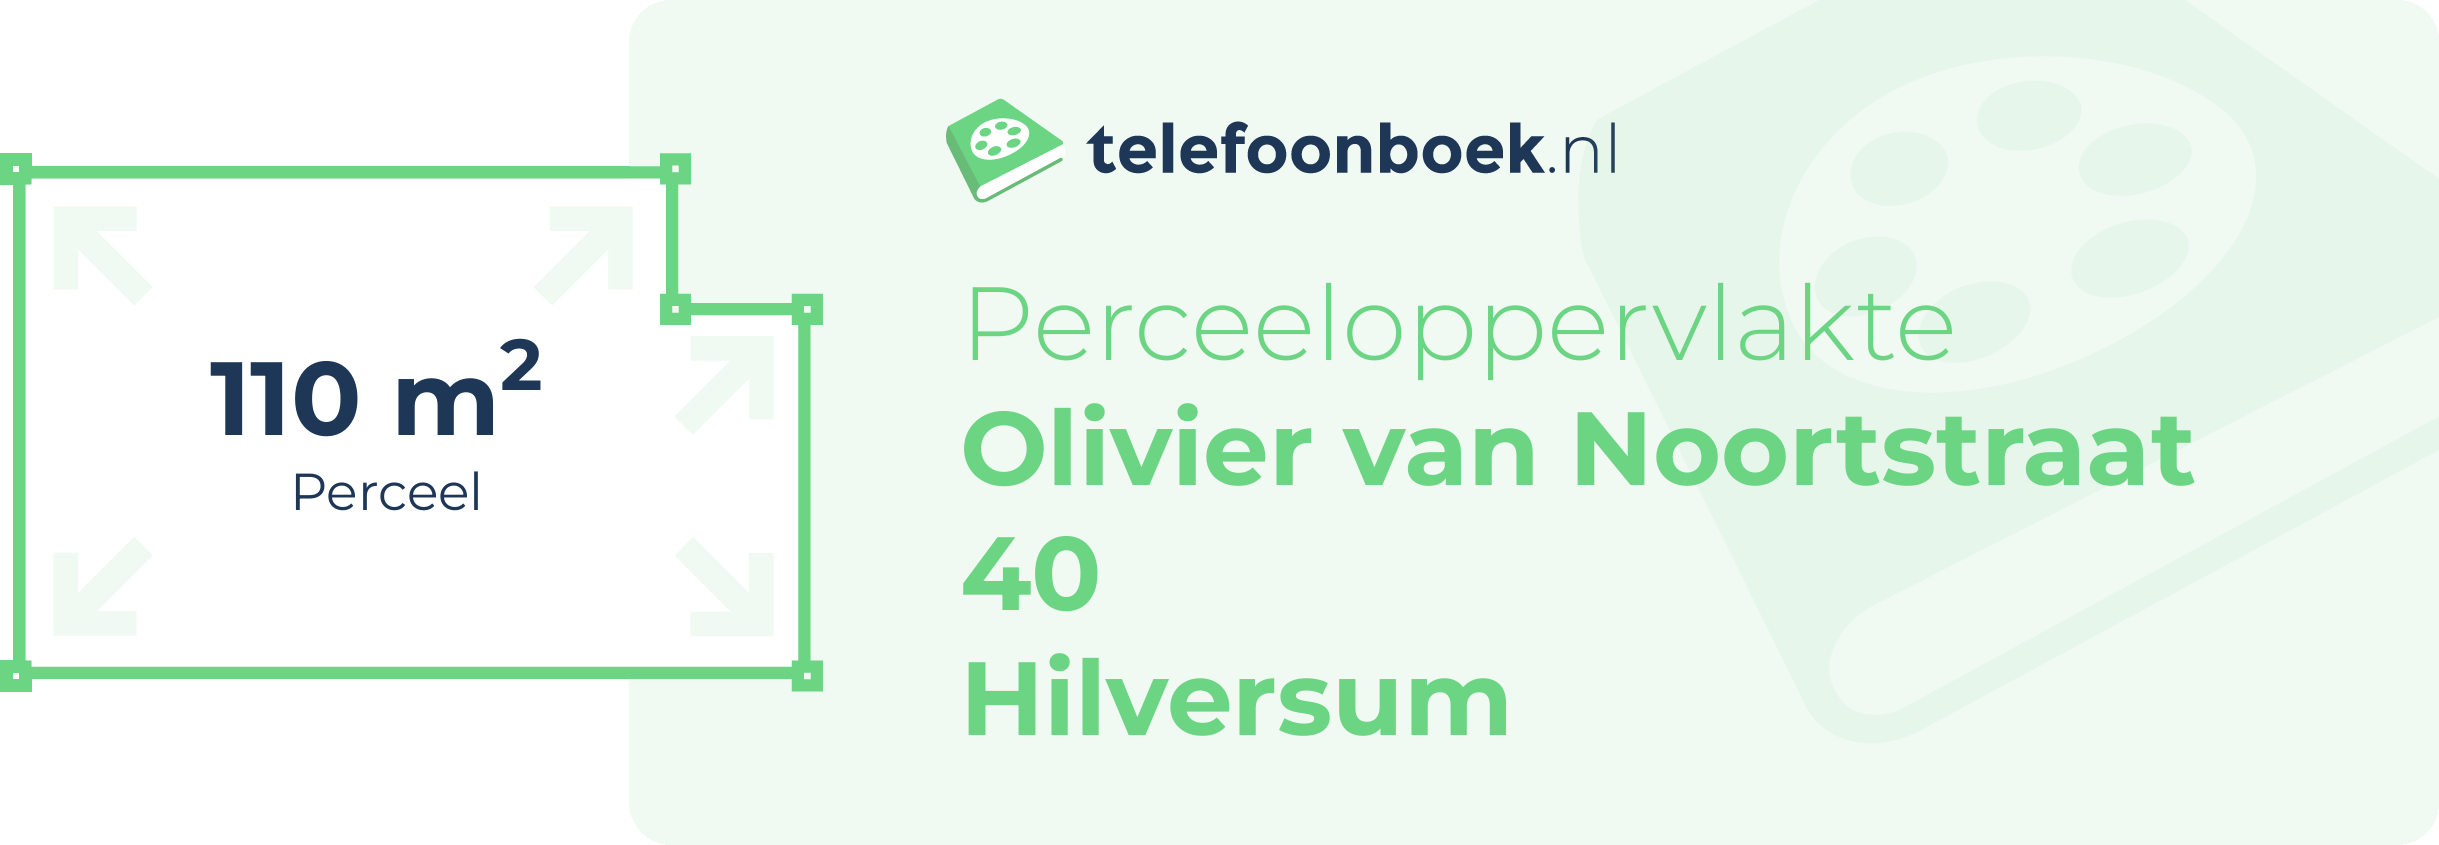 Perceeloppervlakte Olivier Van Noortstraat 40 Hilversum